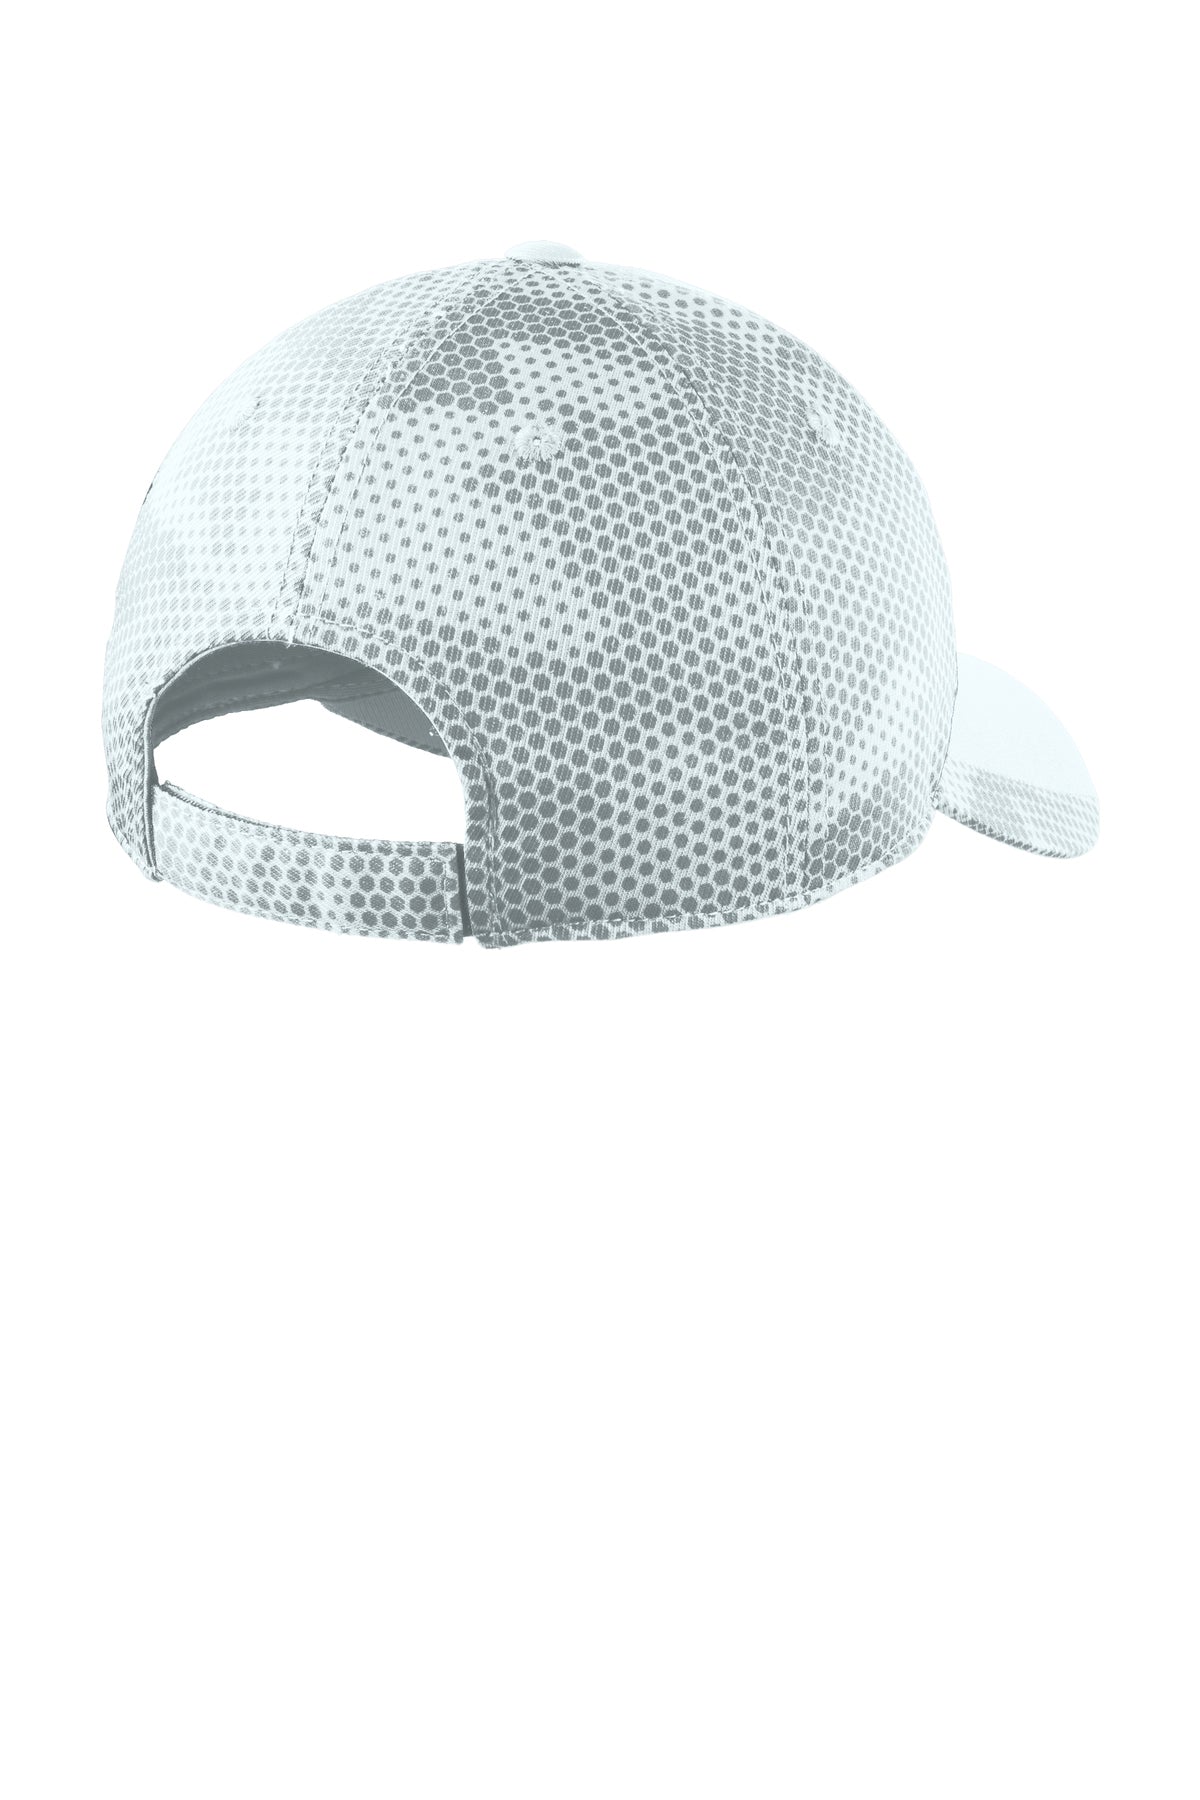 Sport-Tek Customized CamoHex Caps, White